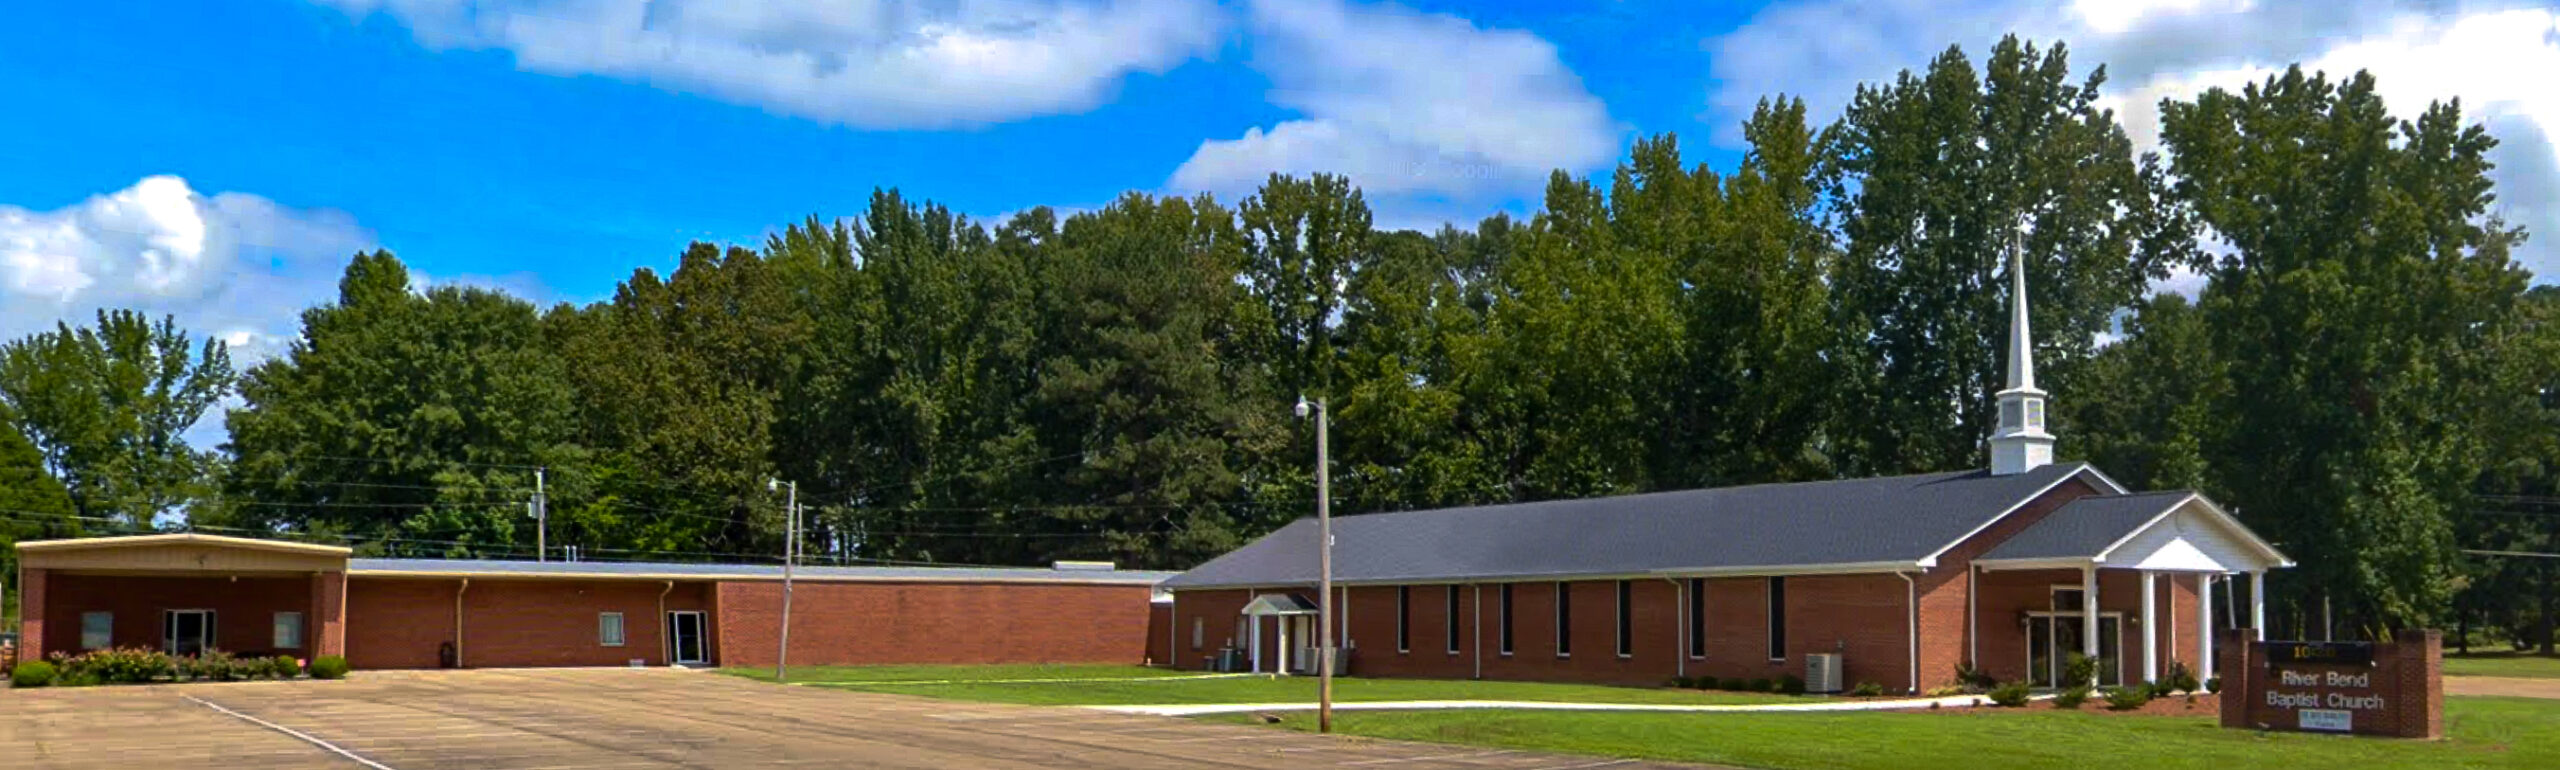 River Bend Baptist Church